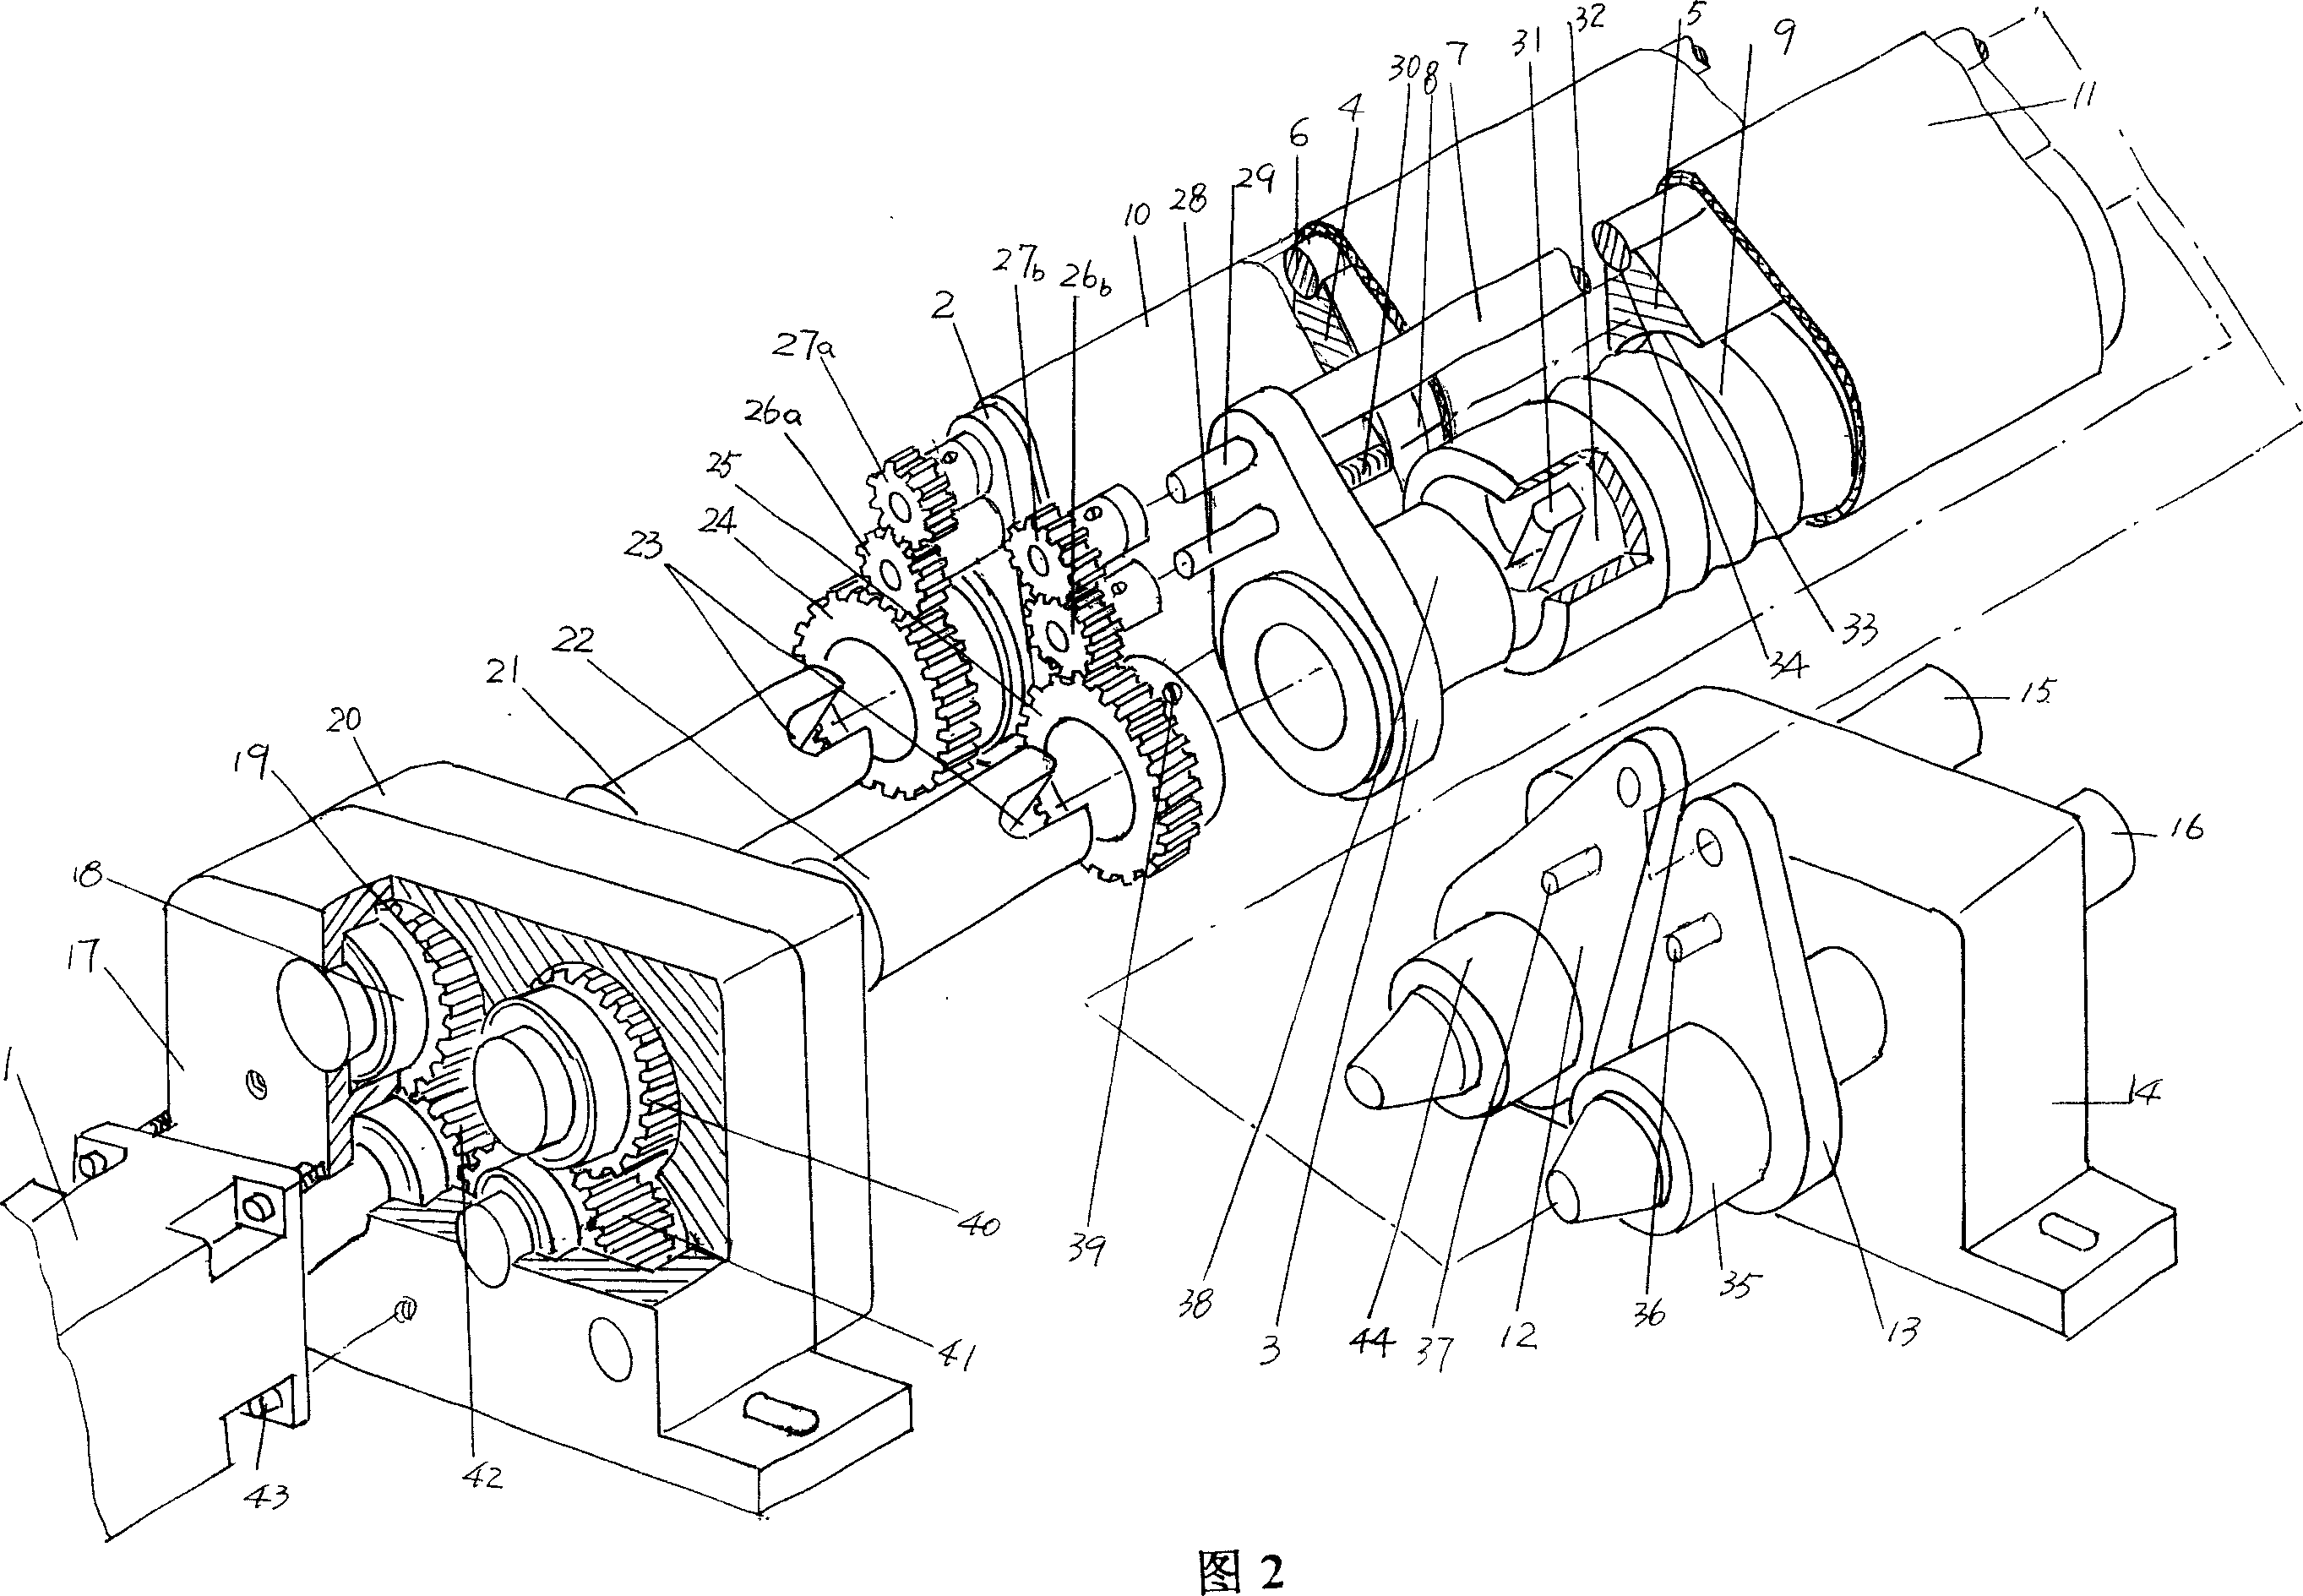 Secondary roller mechanism for full computer flat knitting machine